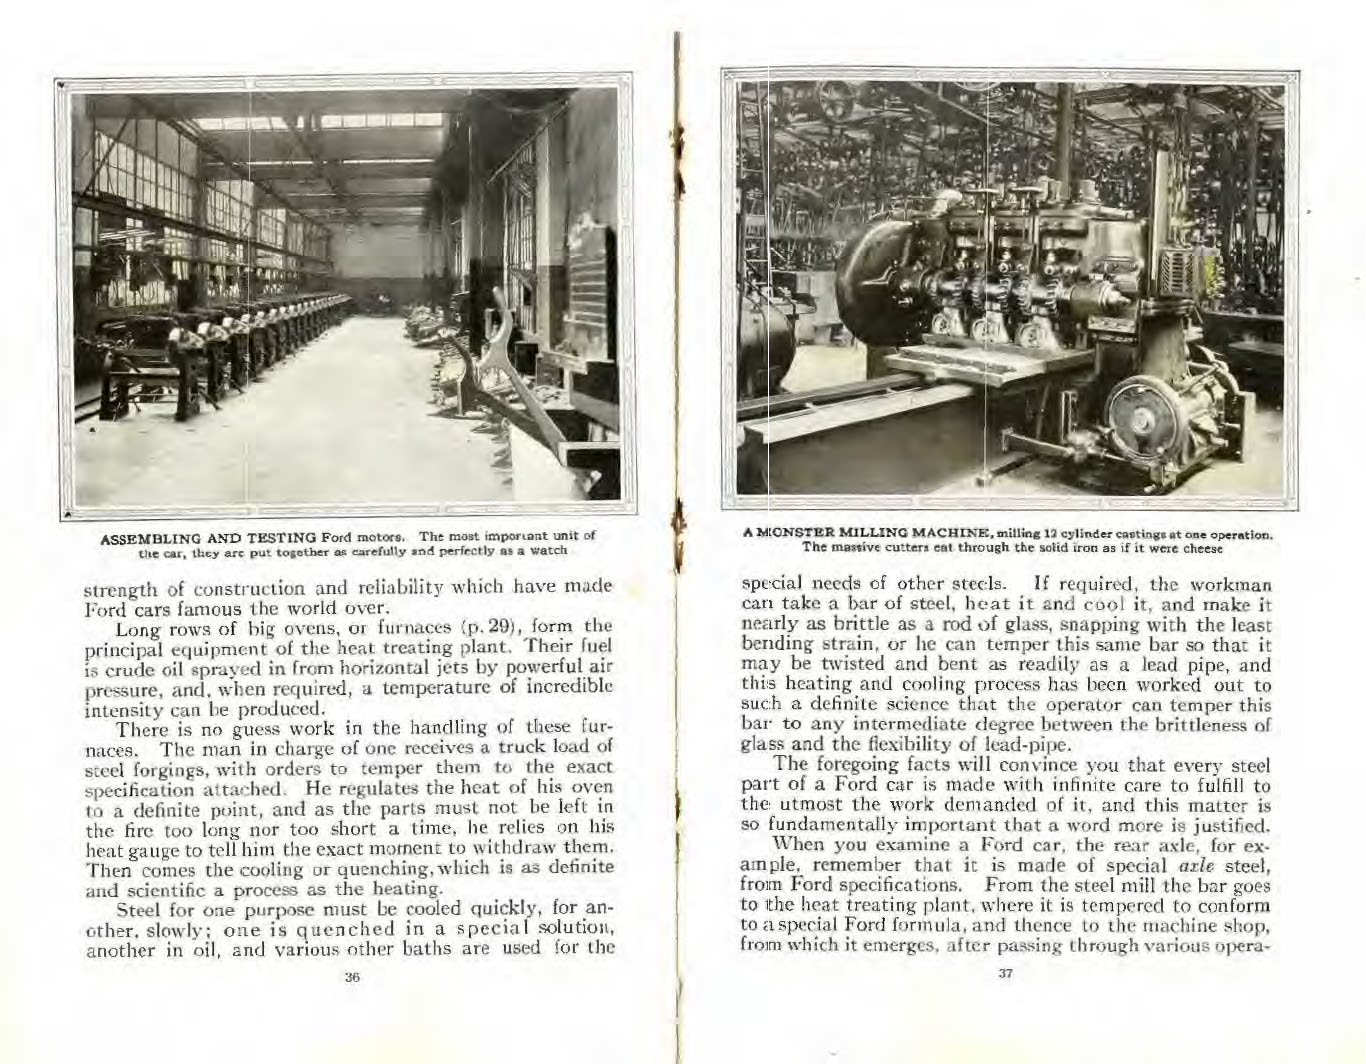 n_1912 Ford Factory Facts (Cdn)-36-37.jpg